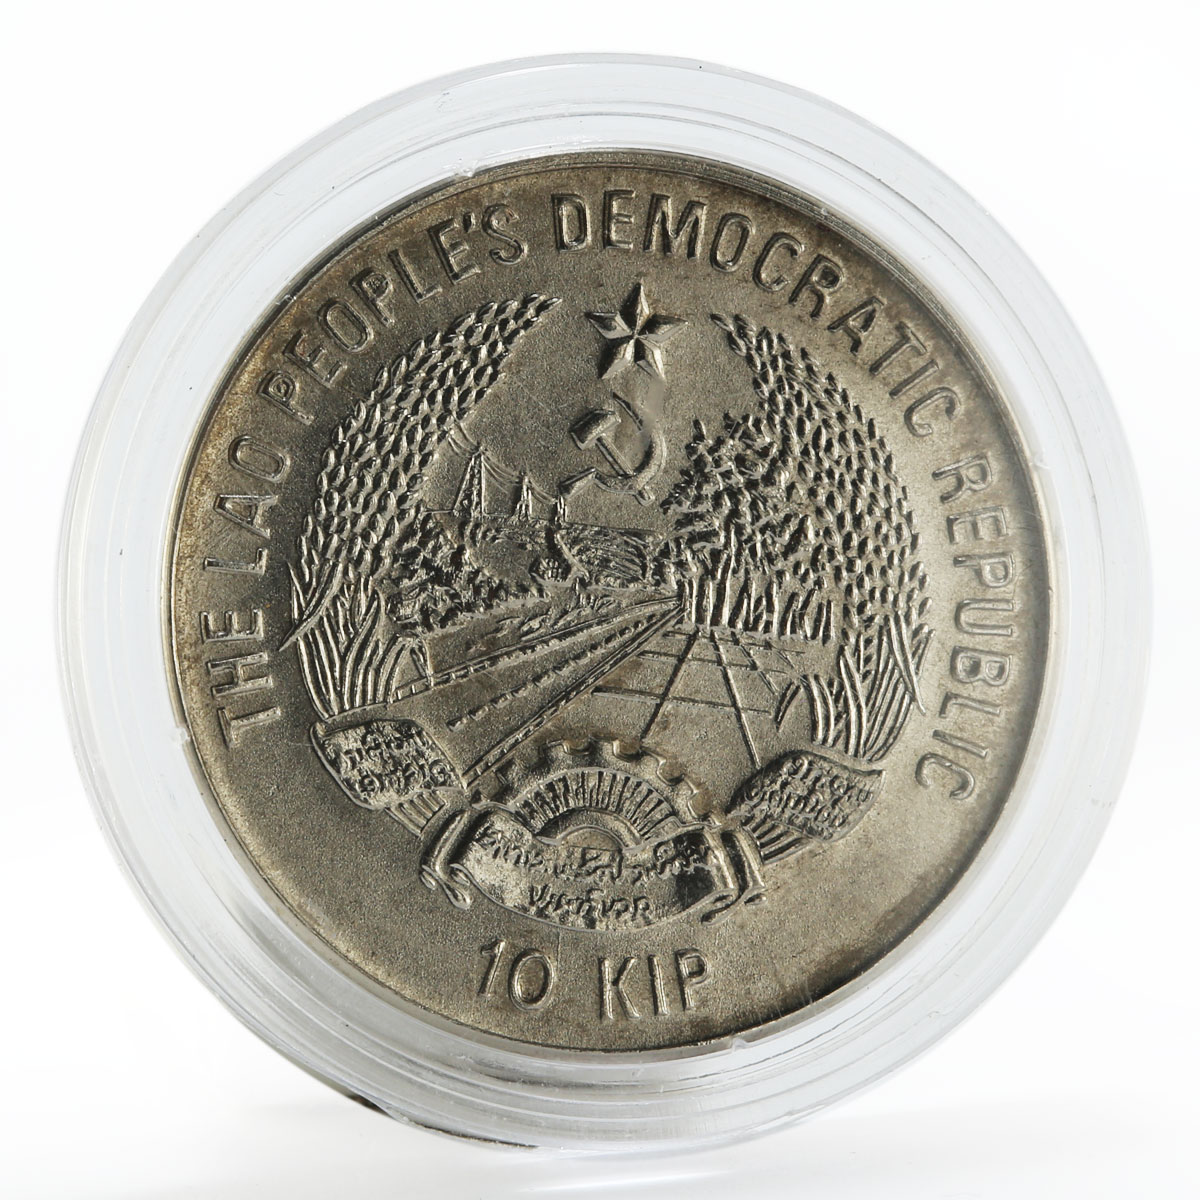 Laos 10 kip World Soccer Championships Italy copper-nickel coin 1989